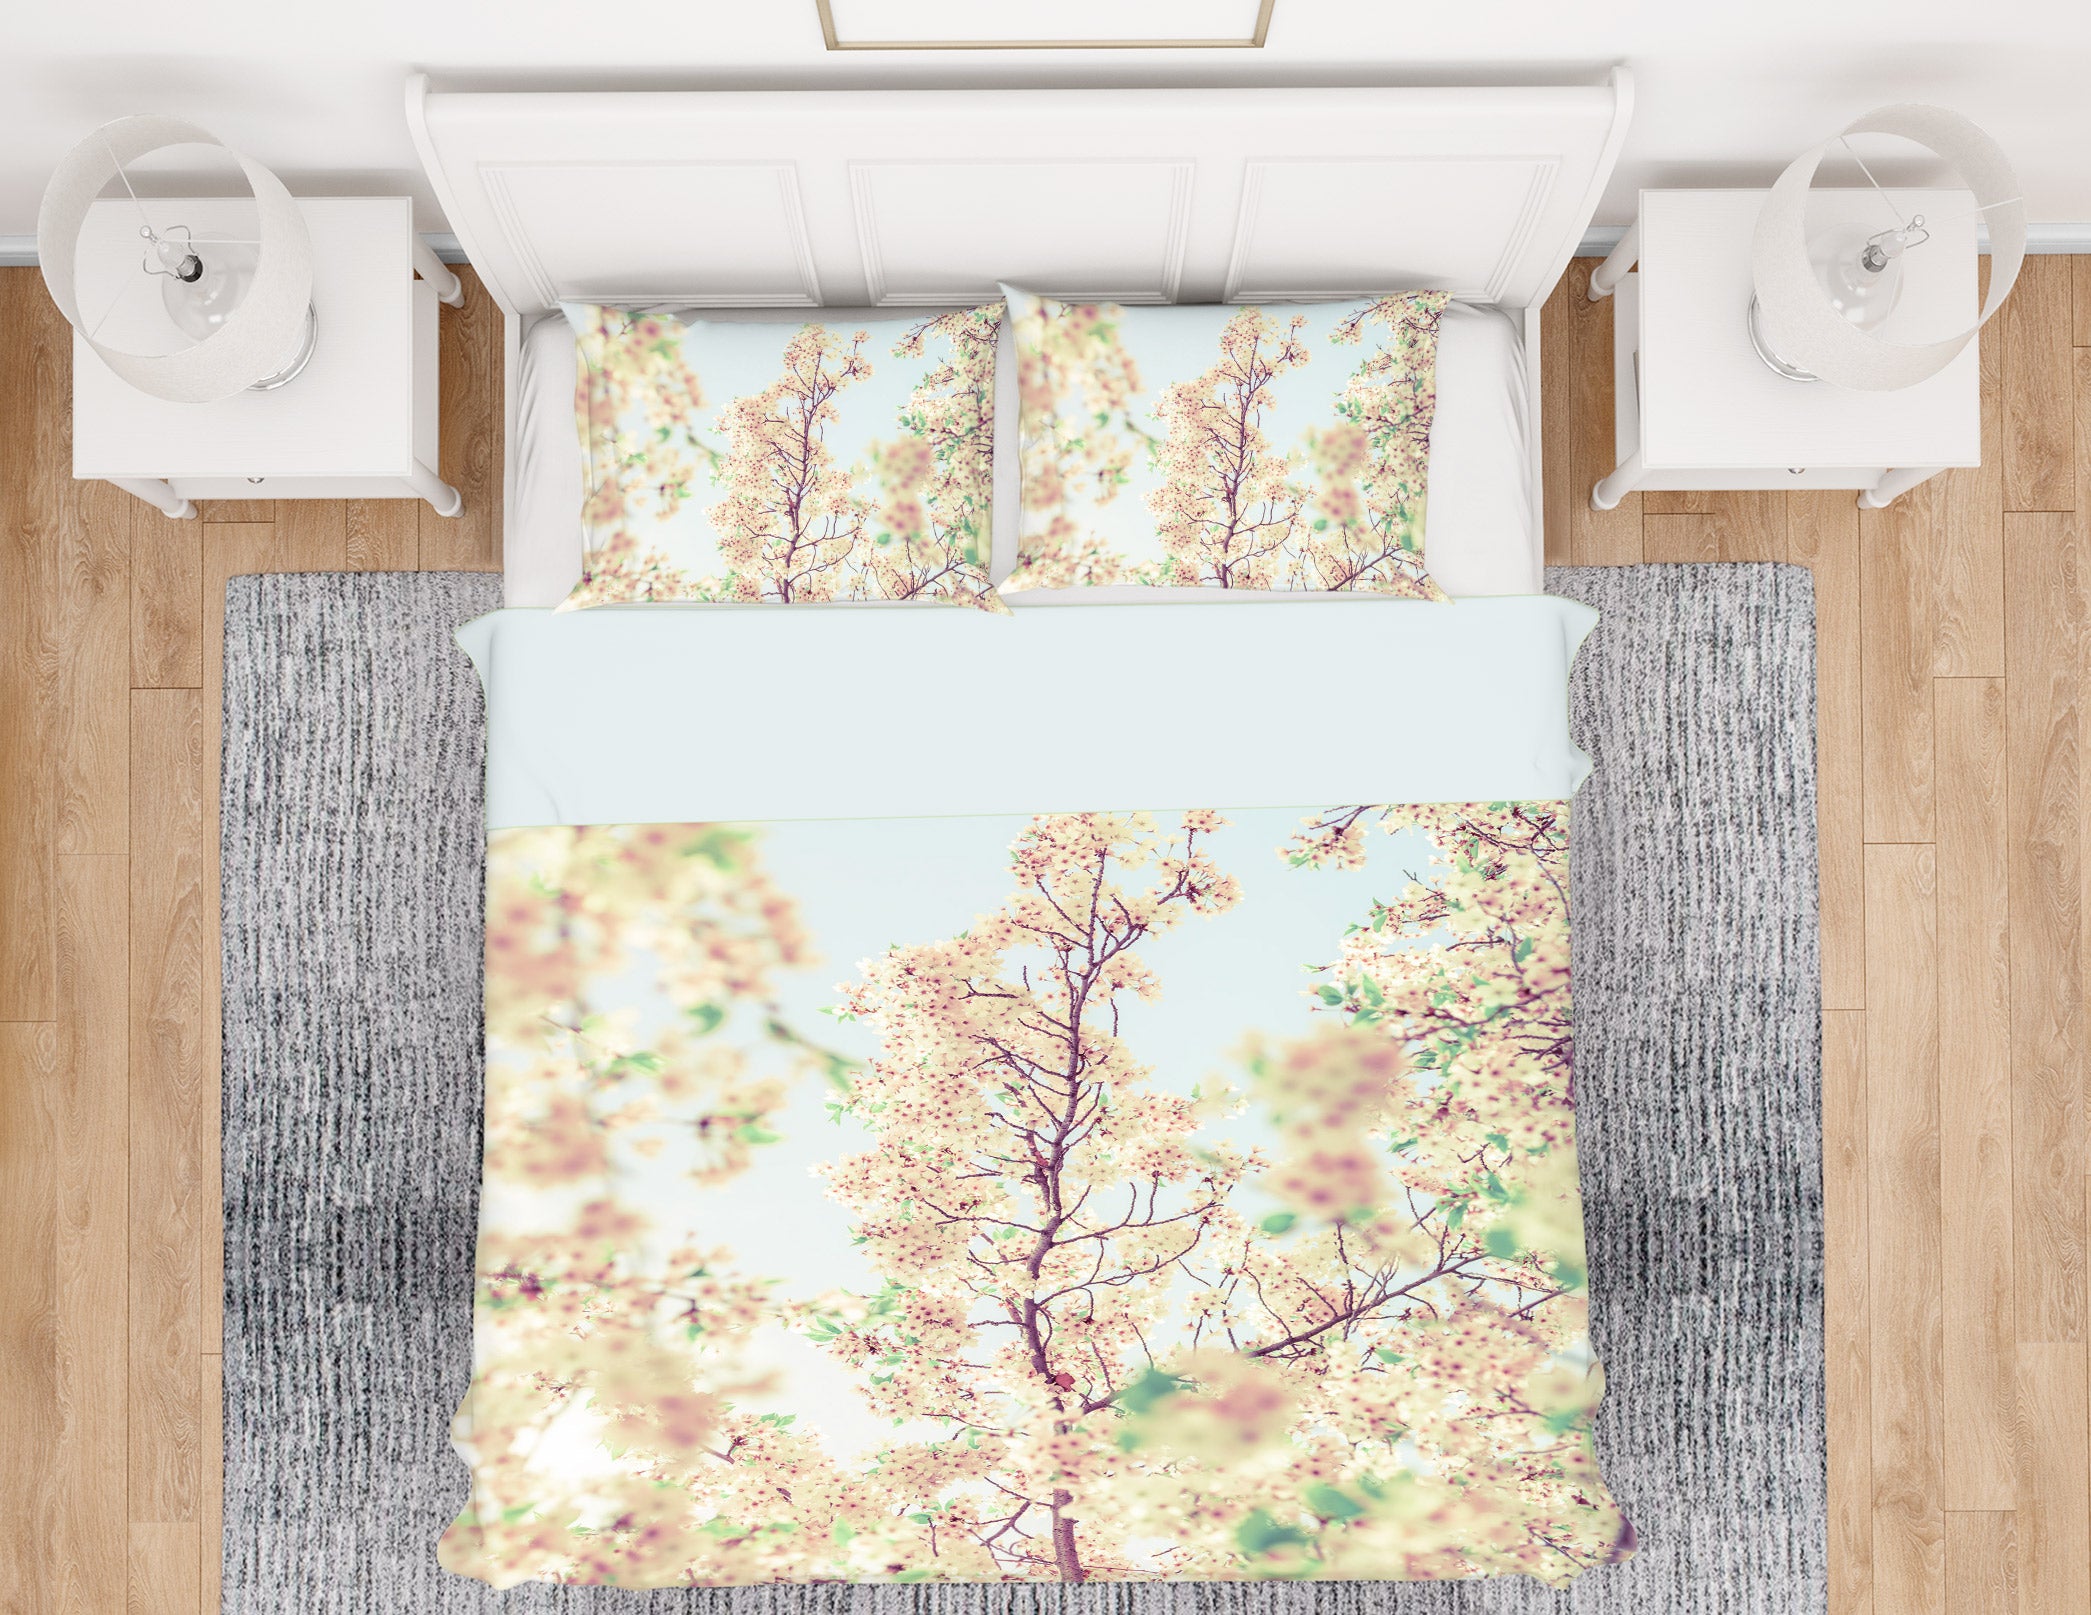 3D Flower Branch 6941 Assaf Frank Bedding Bed Pillowcases Quilt Cover Duvet Cover